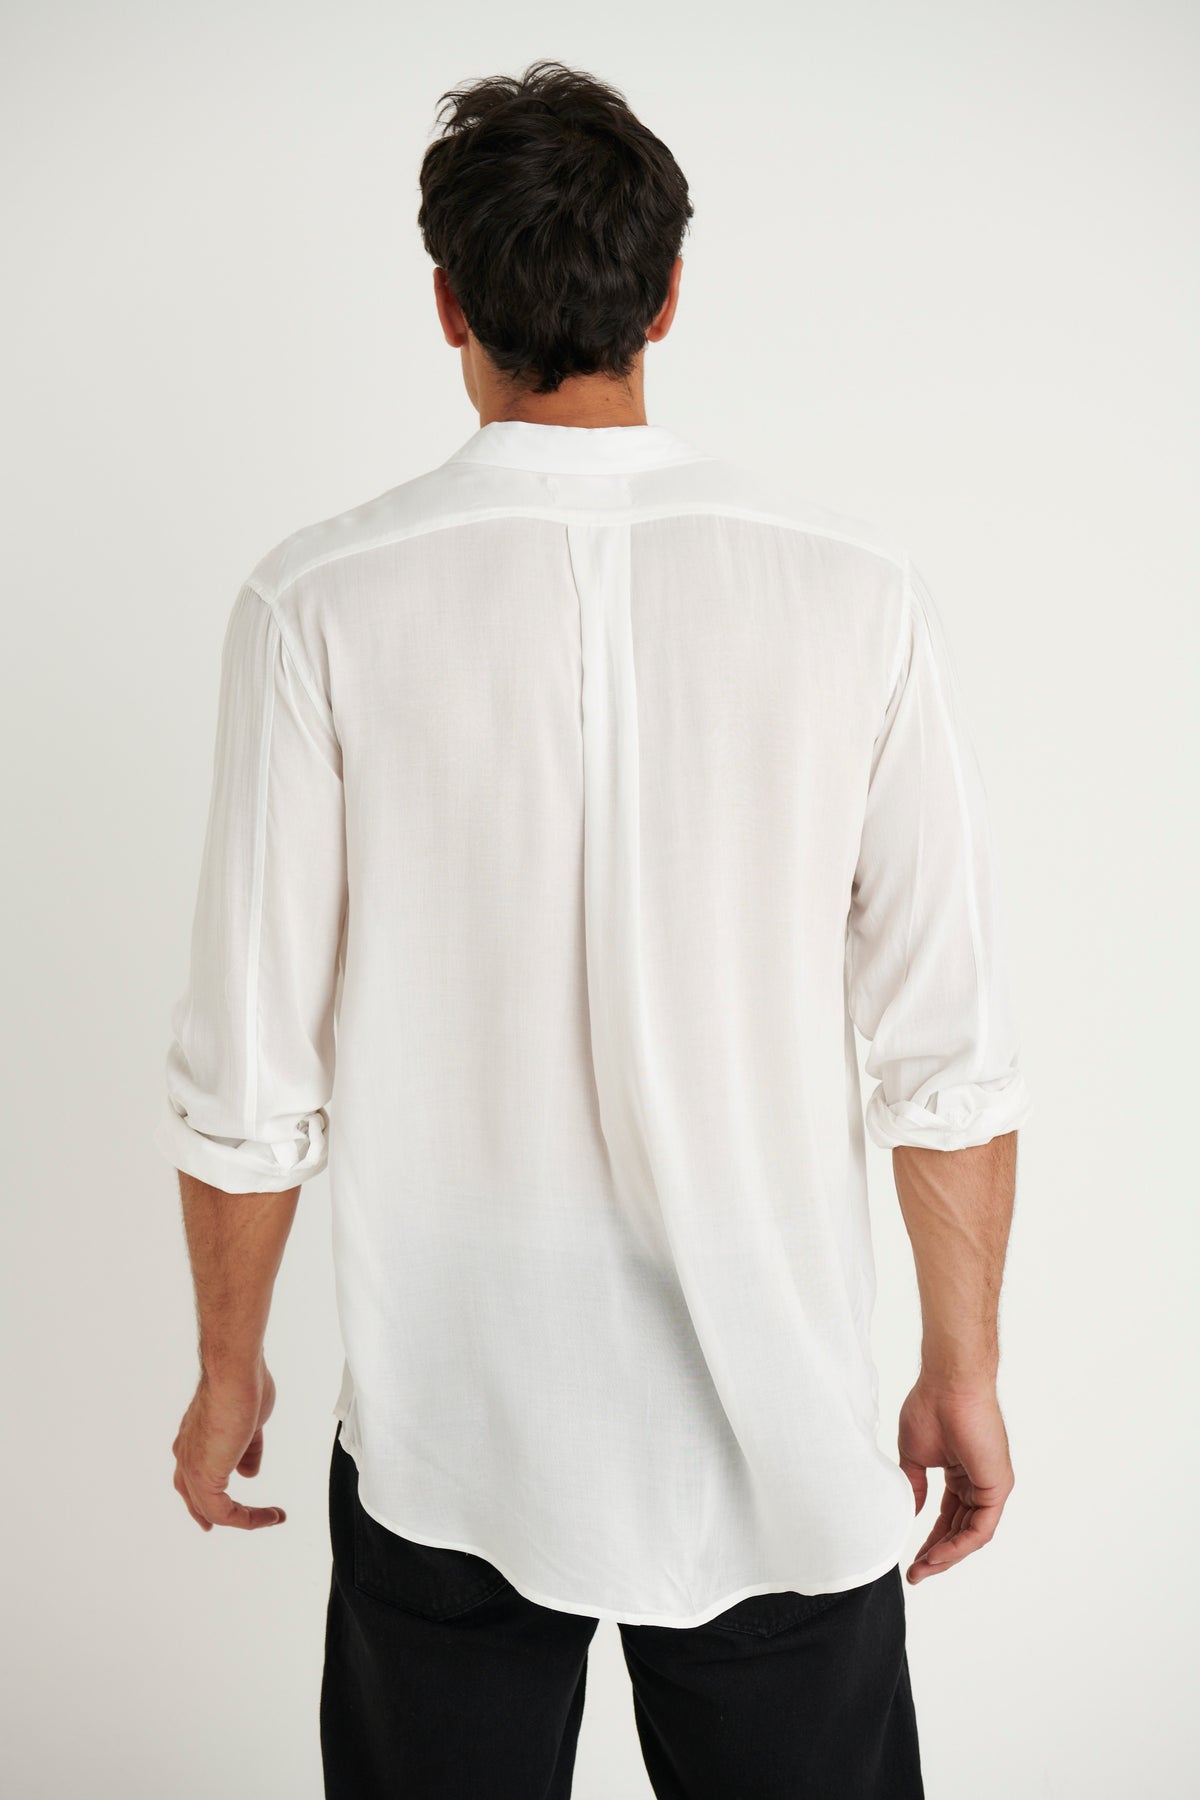 NTH Rayon Long Sleeve Shirt White